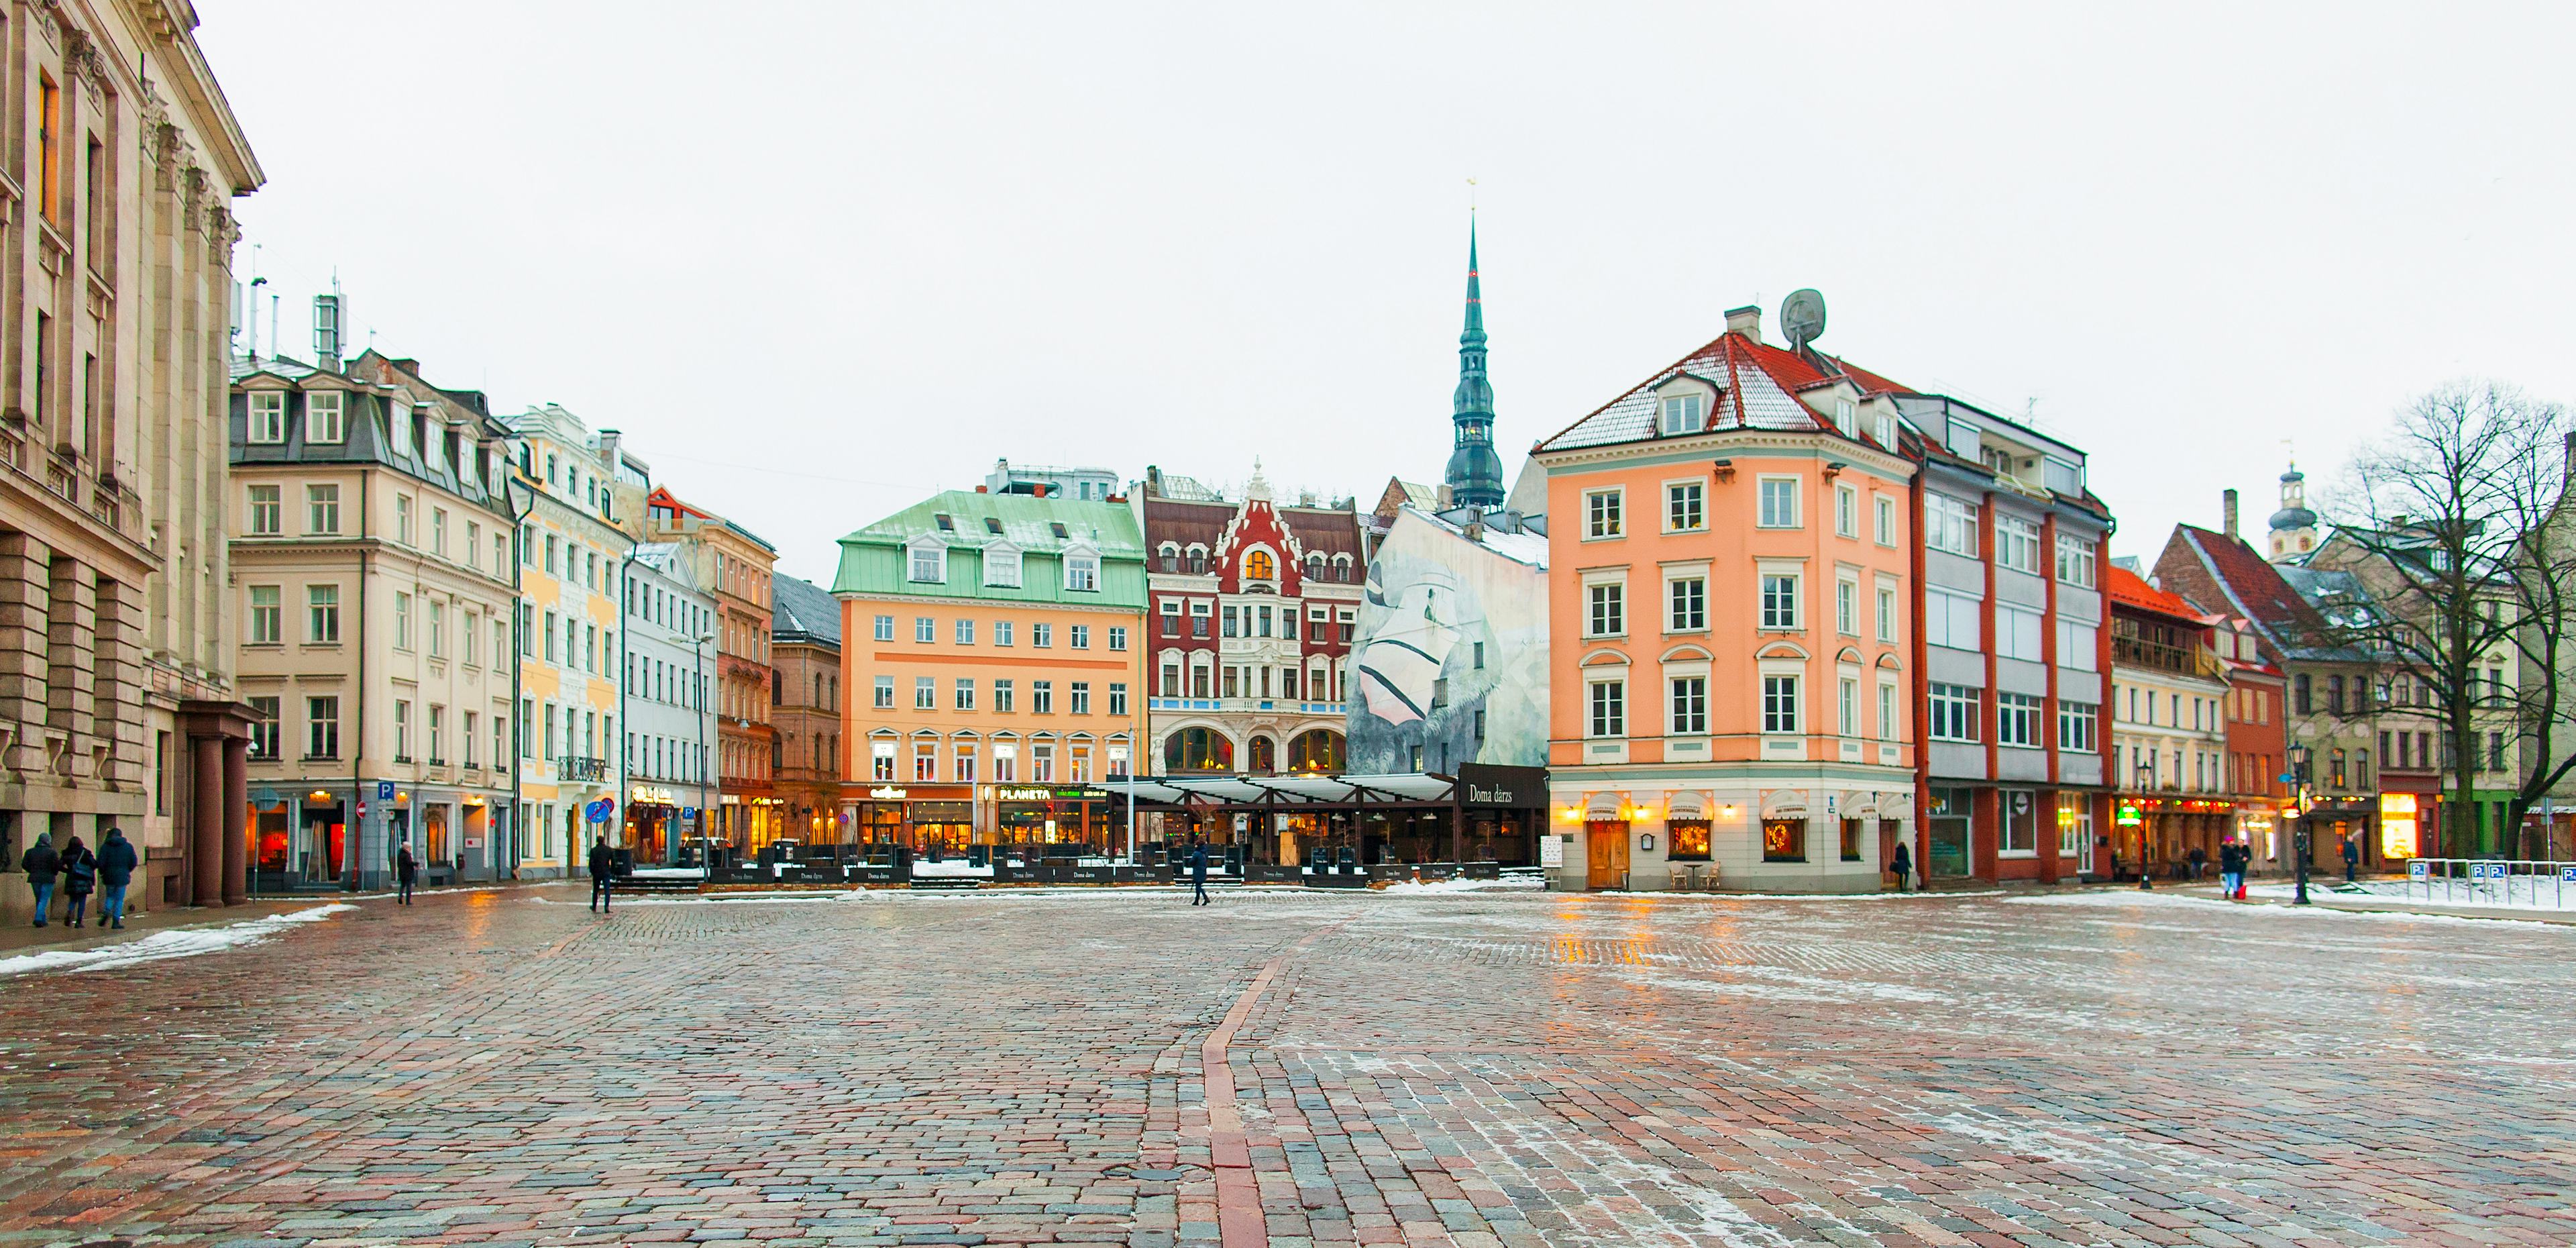 Old Town Riga, Latvia